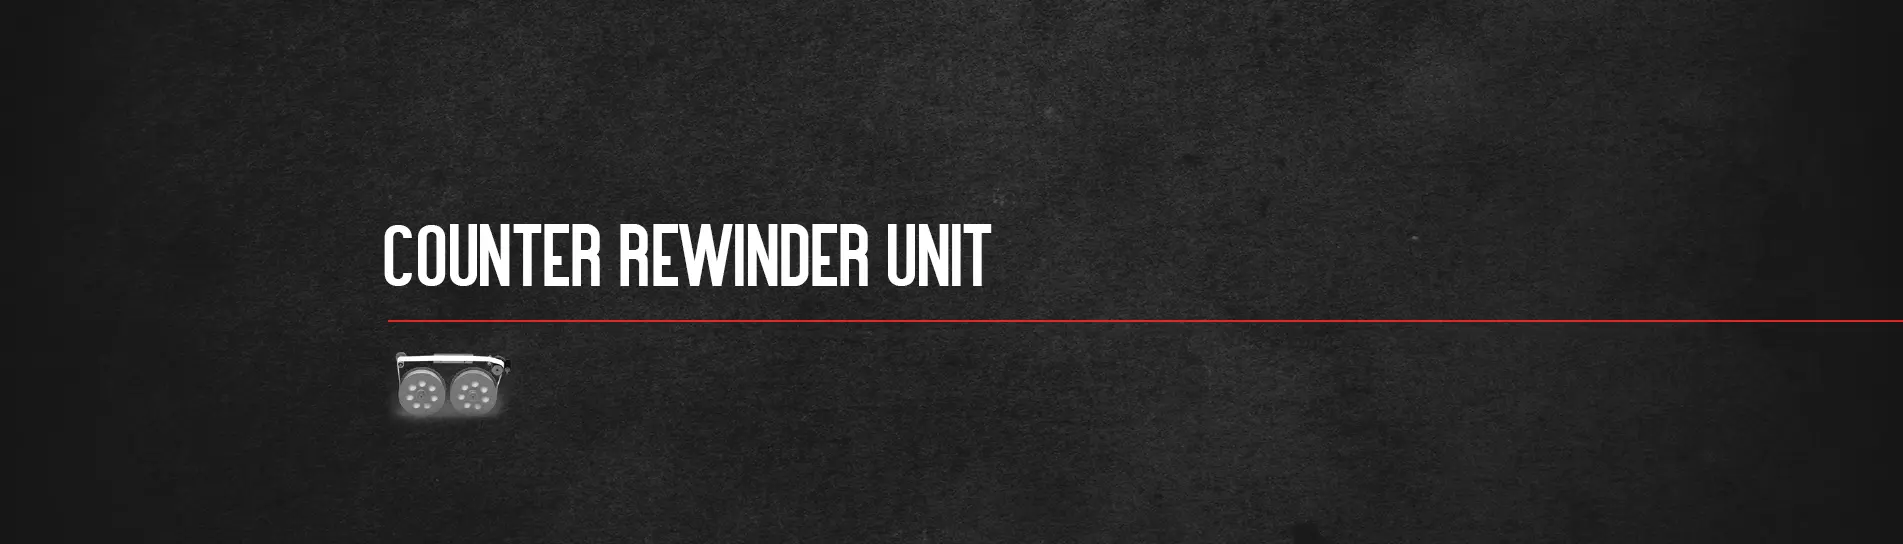 Counter Rewinder Unit